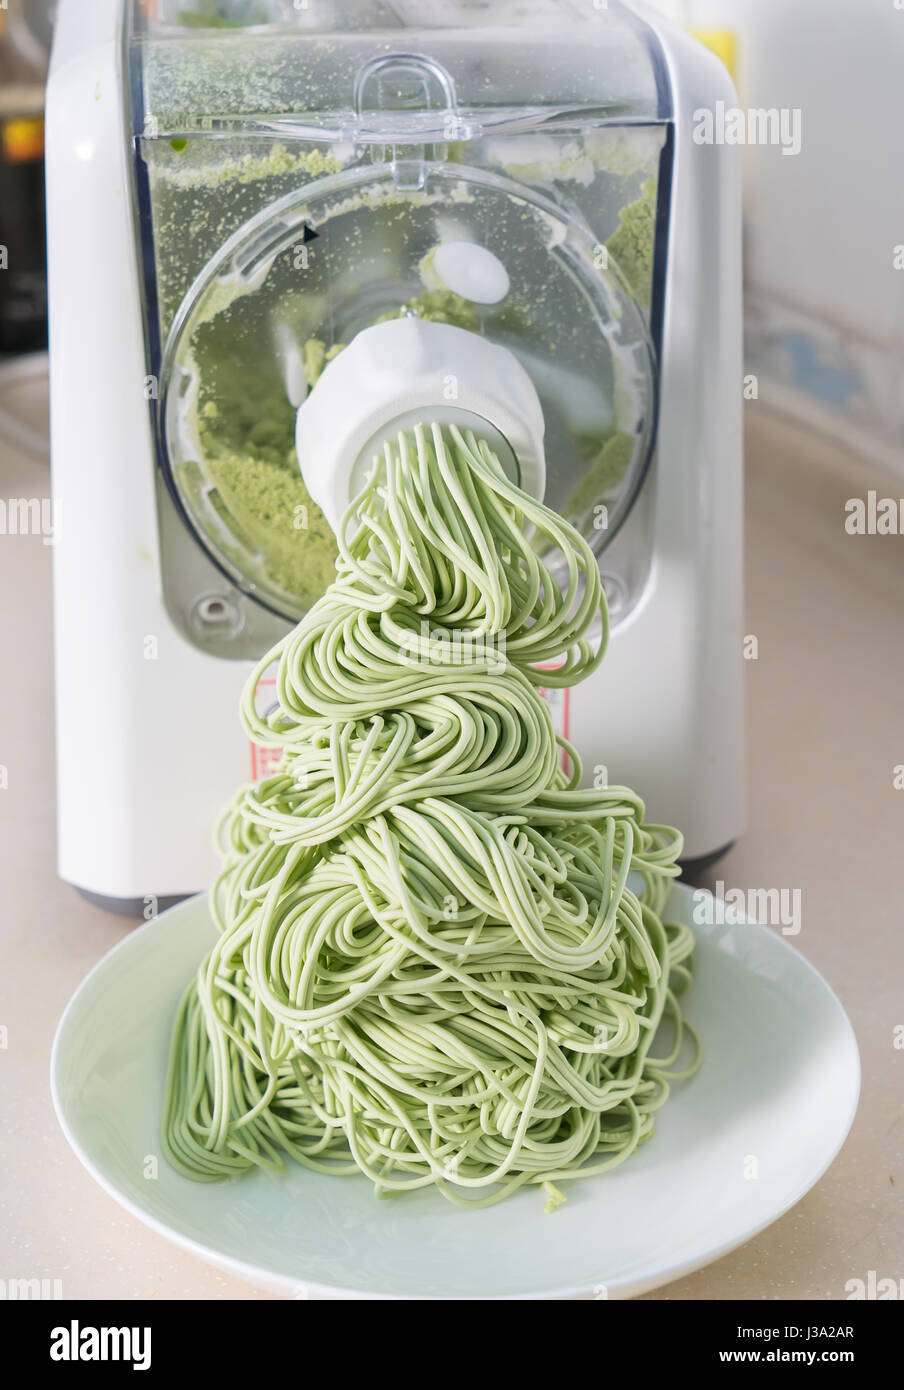 Green spaghetti pasta sheet being processed in machine Stock Photo